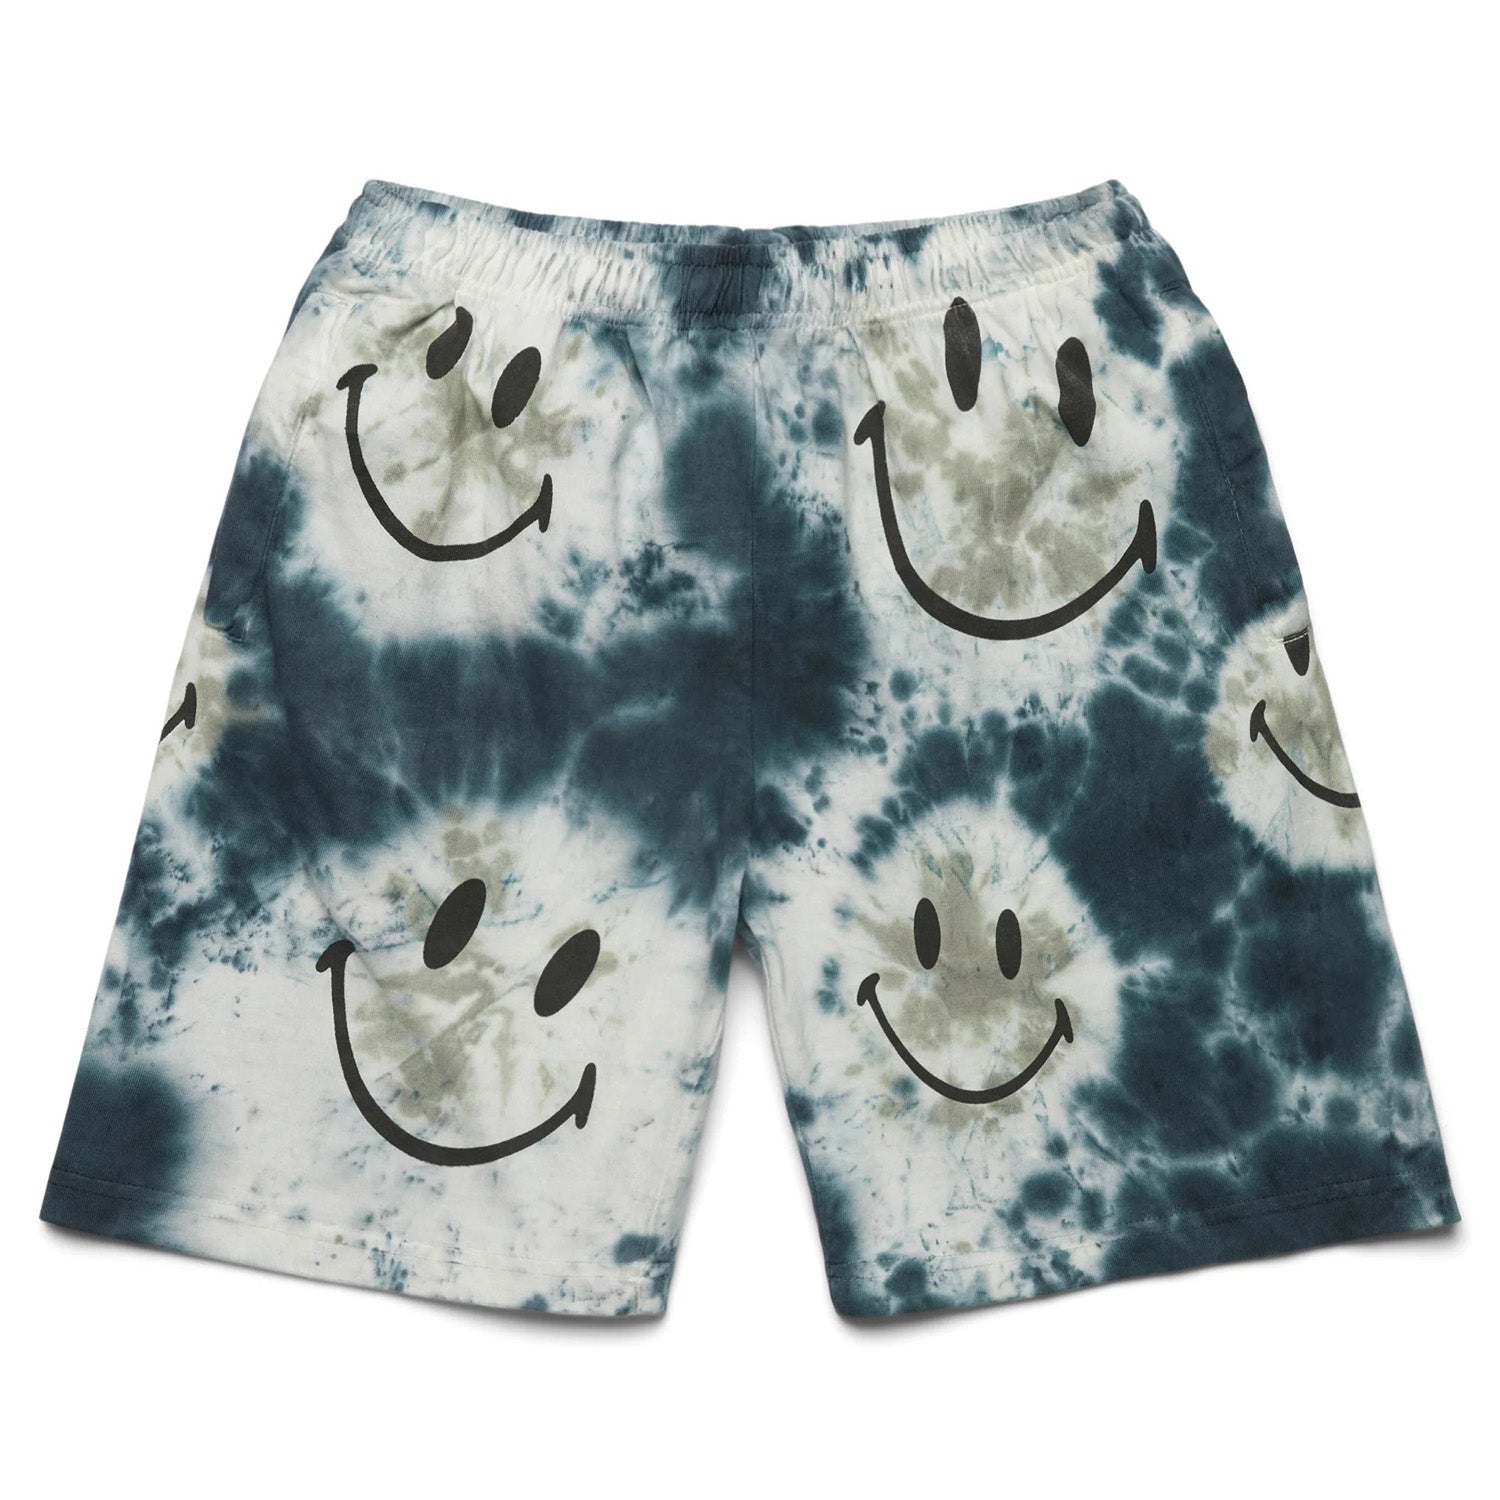 Market Men Smiley Shibori Dye Shorts Black - SHORTS - Canada